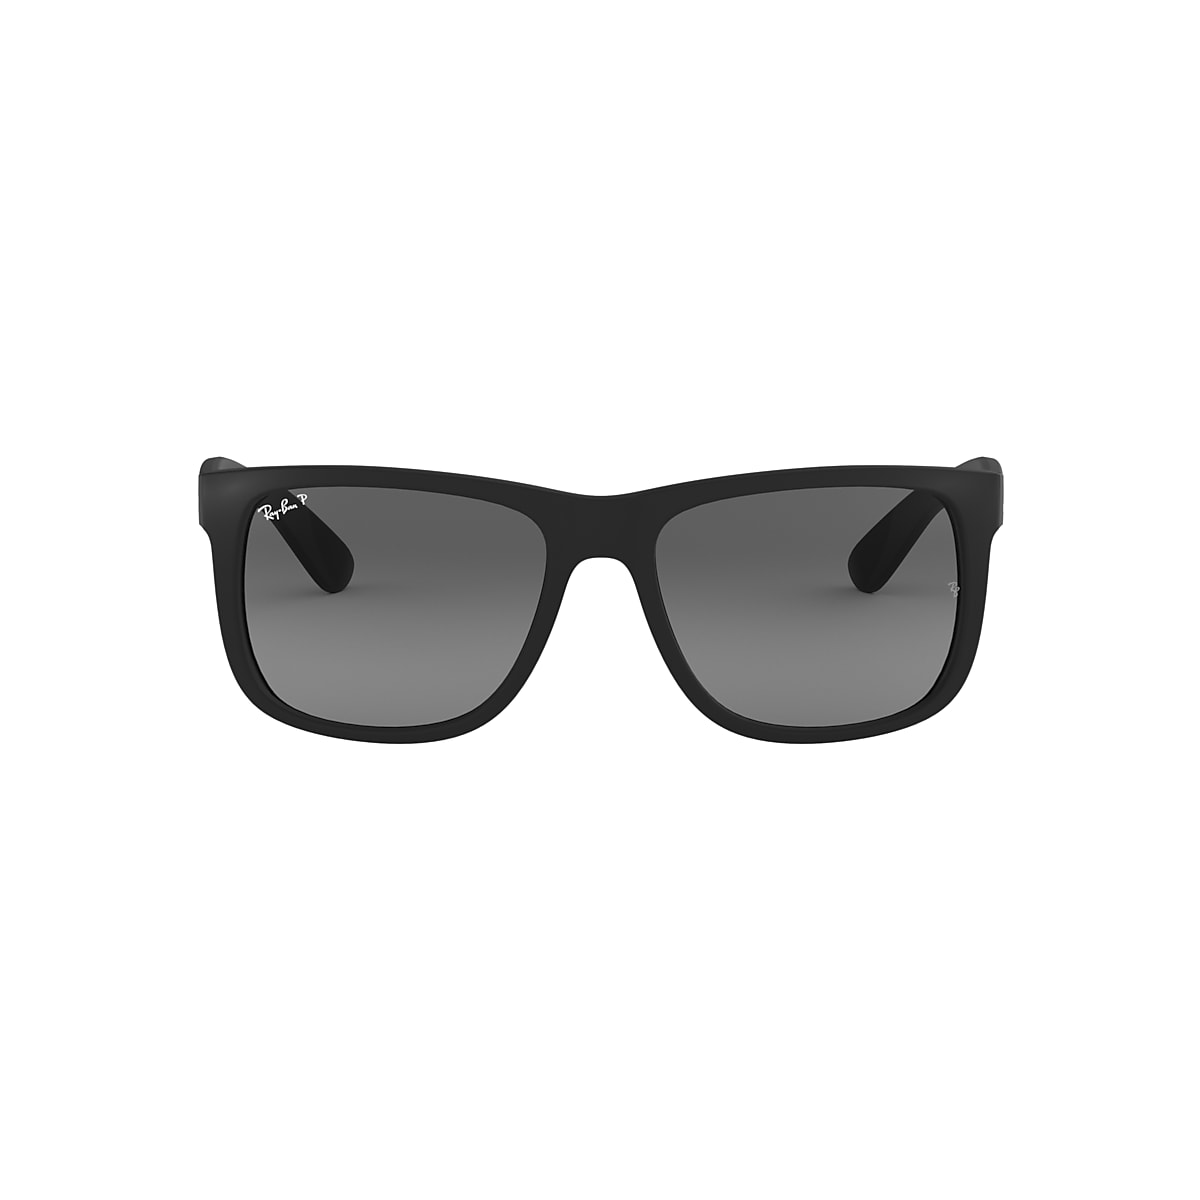 Ray-Ban Justin Classic Sunglasses RB4165 622/2V - Matte Black Frame - Polarized Blue Classic Lenses - Size 55-16